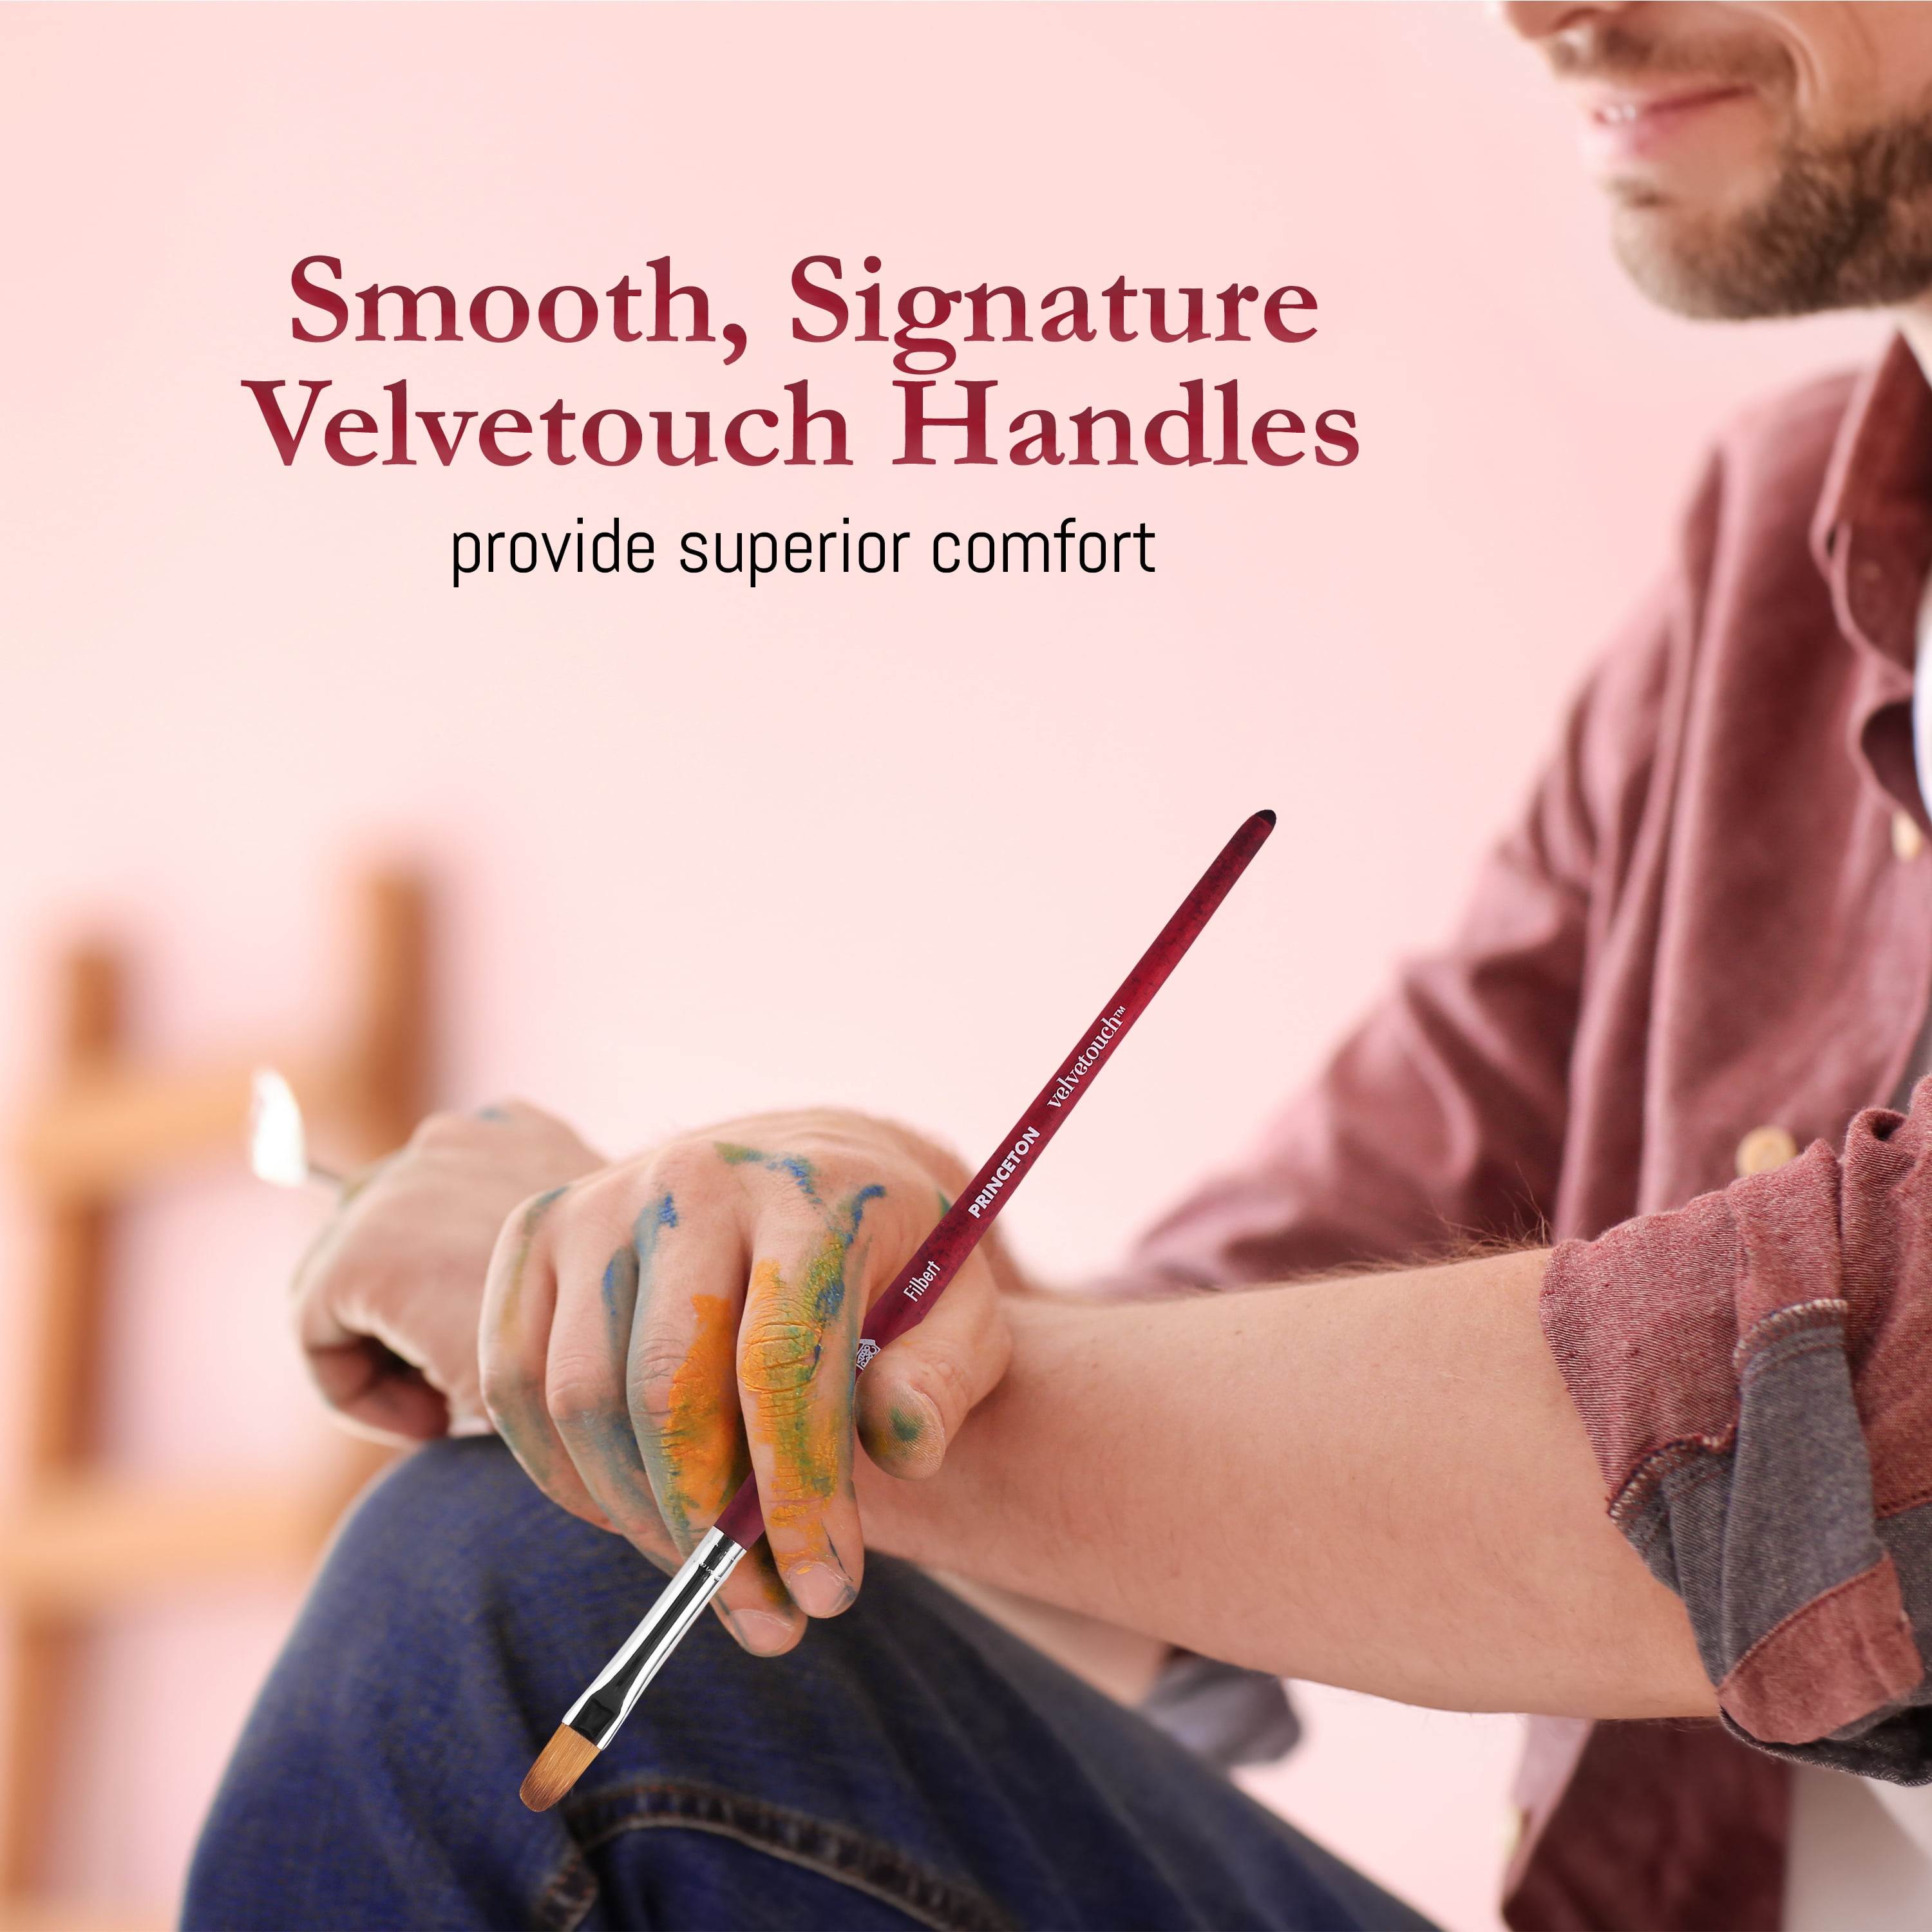 Princeton : Velvetouch : Series 3950 : Short Handle - Princeton :  Velvetouch - Princeton - Brands